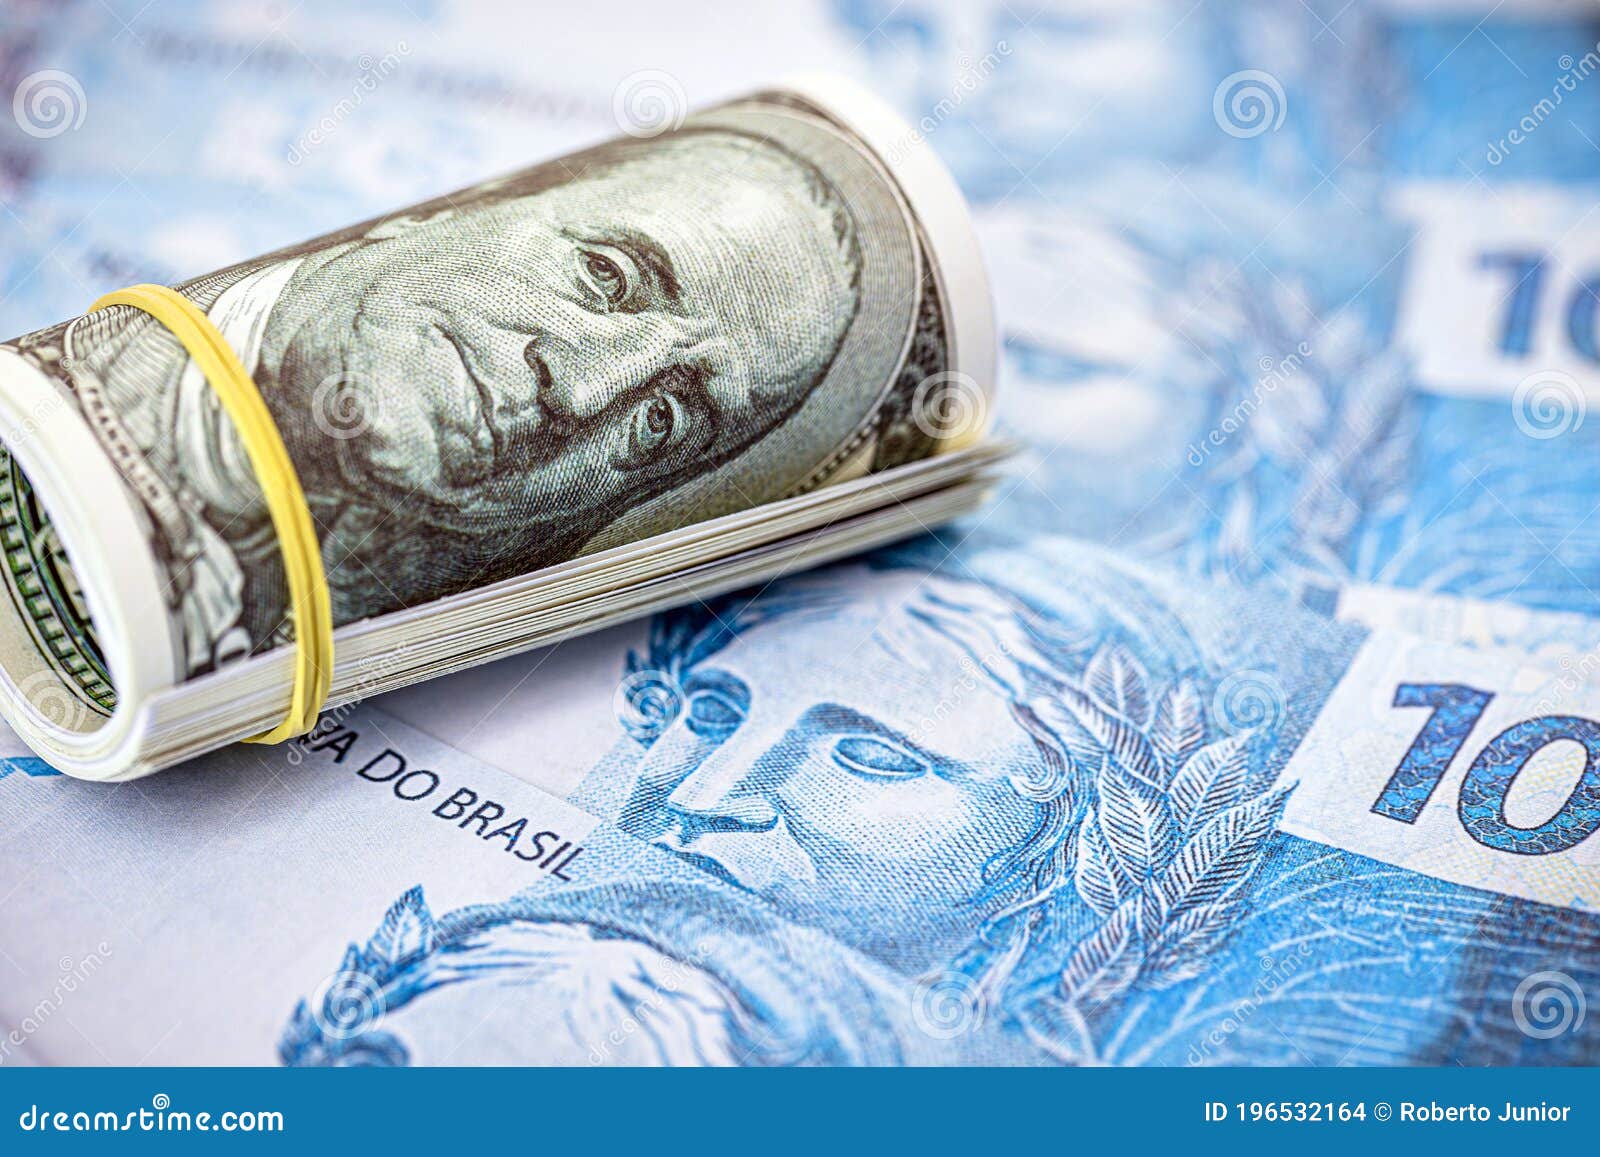 Dólar alto frente a la moneda brasileña